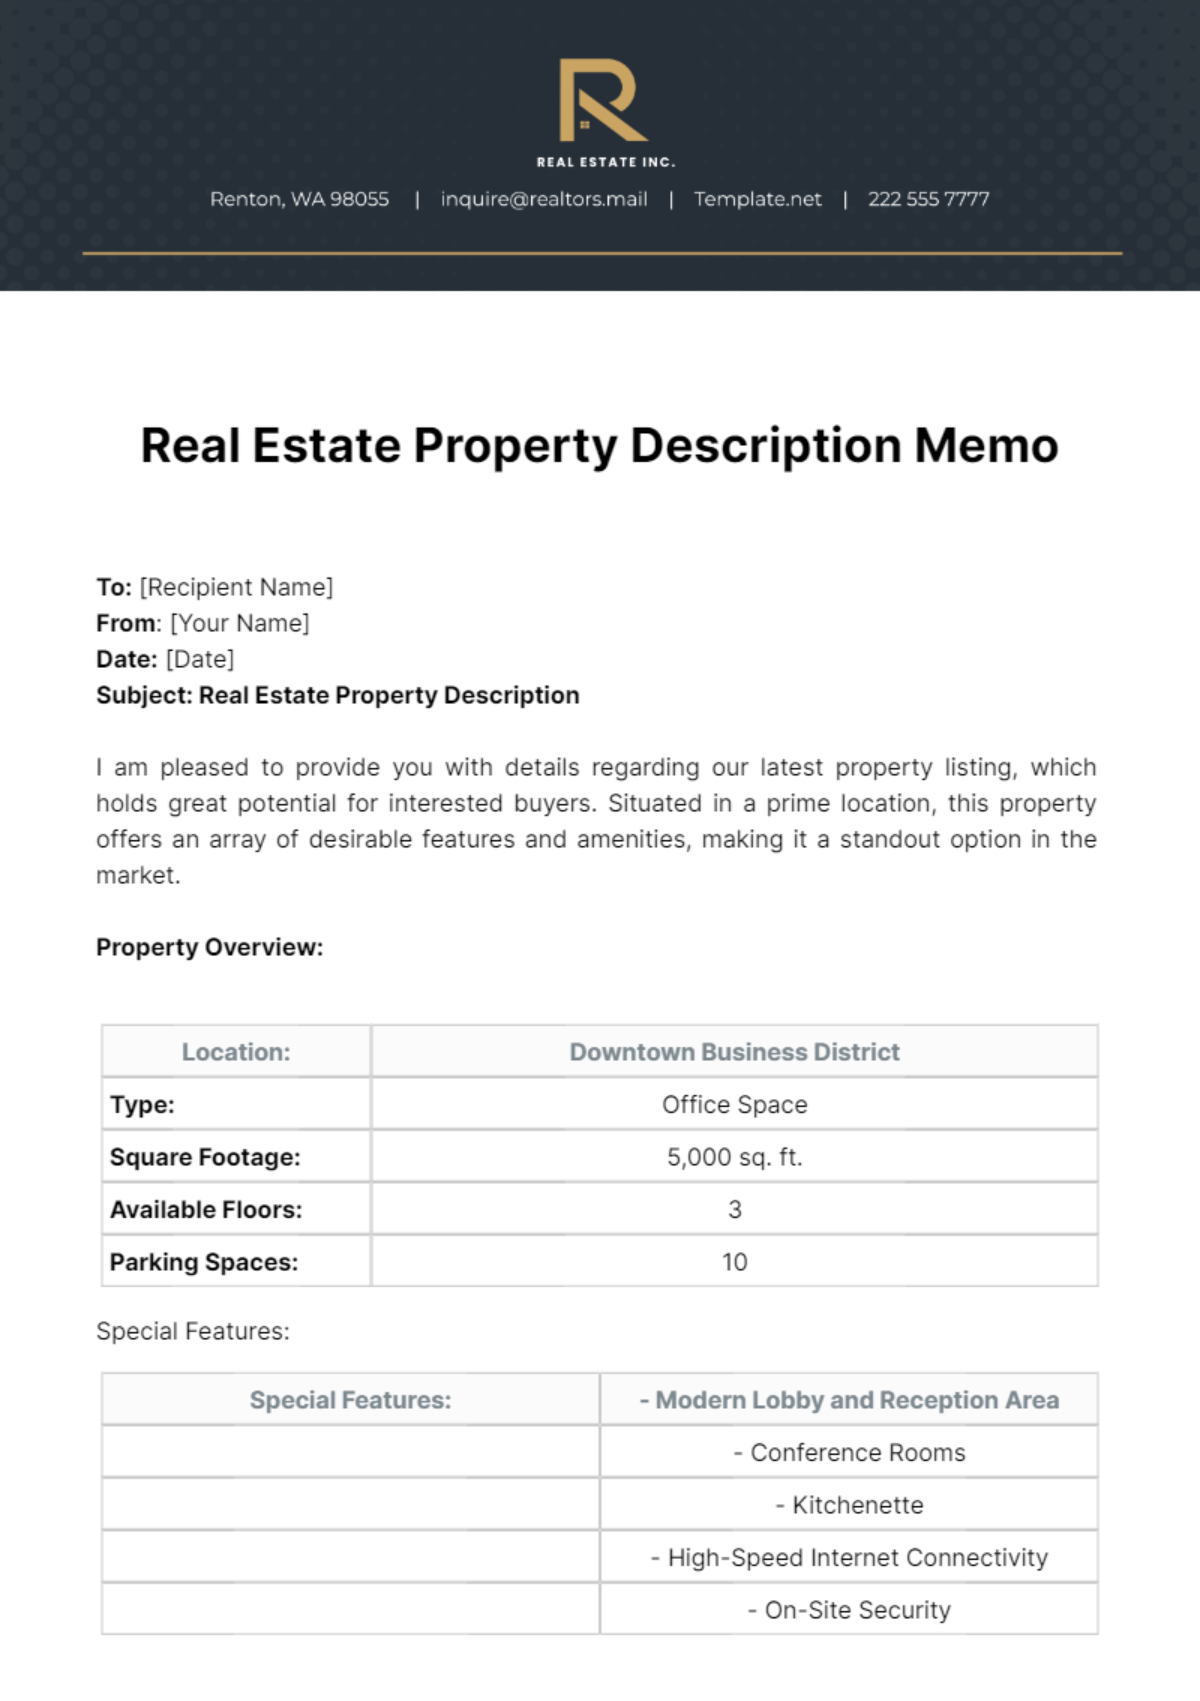 Real Estate Property Description Memo Template